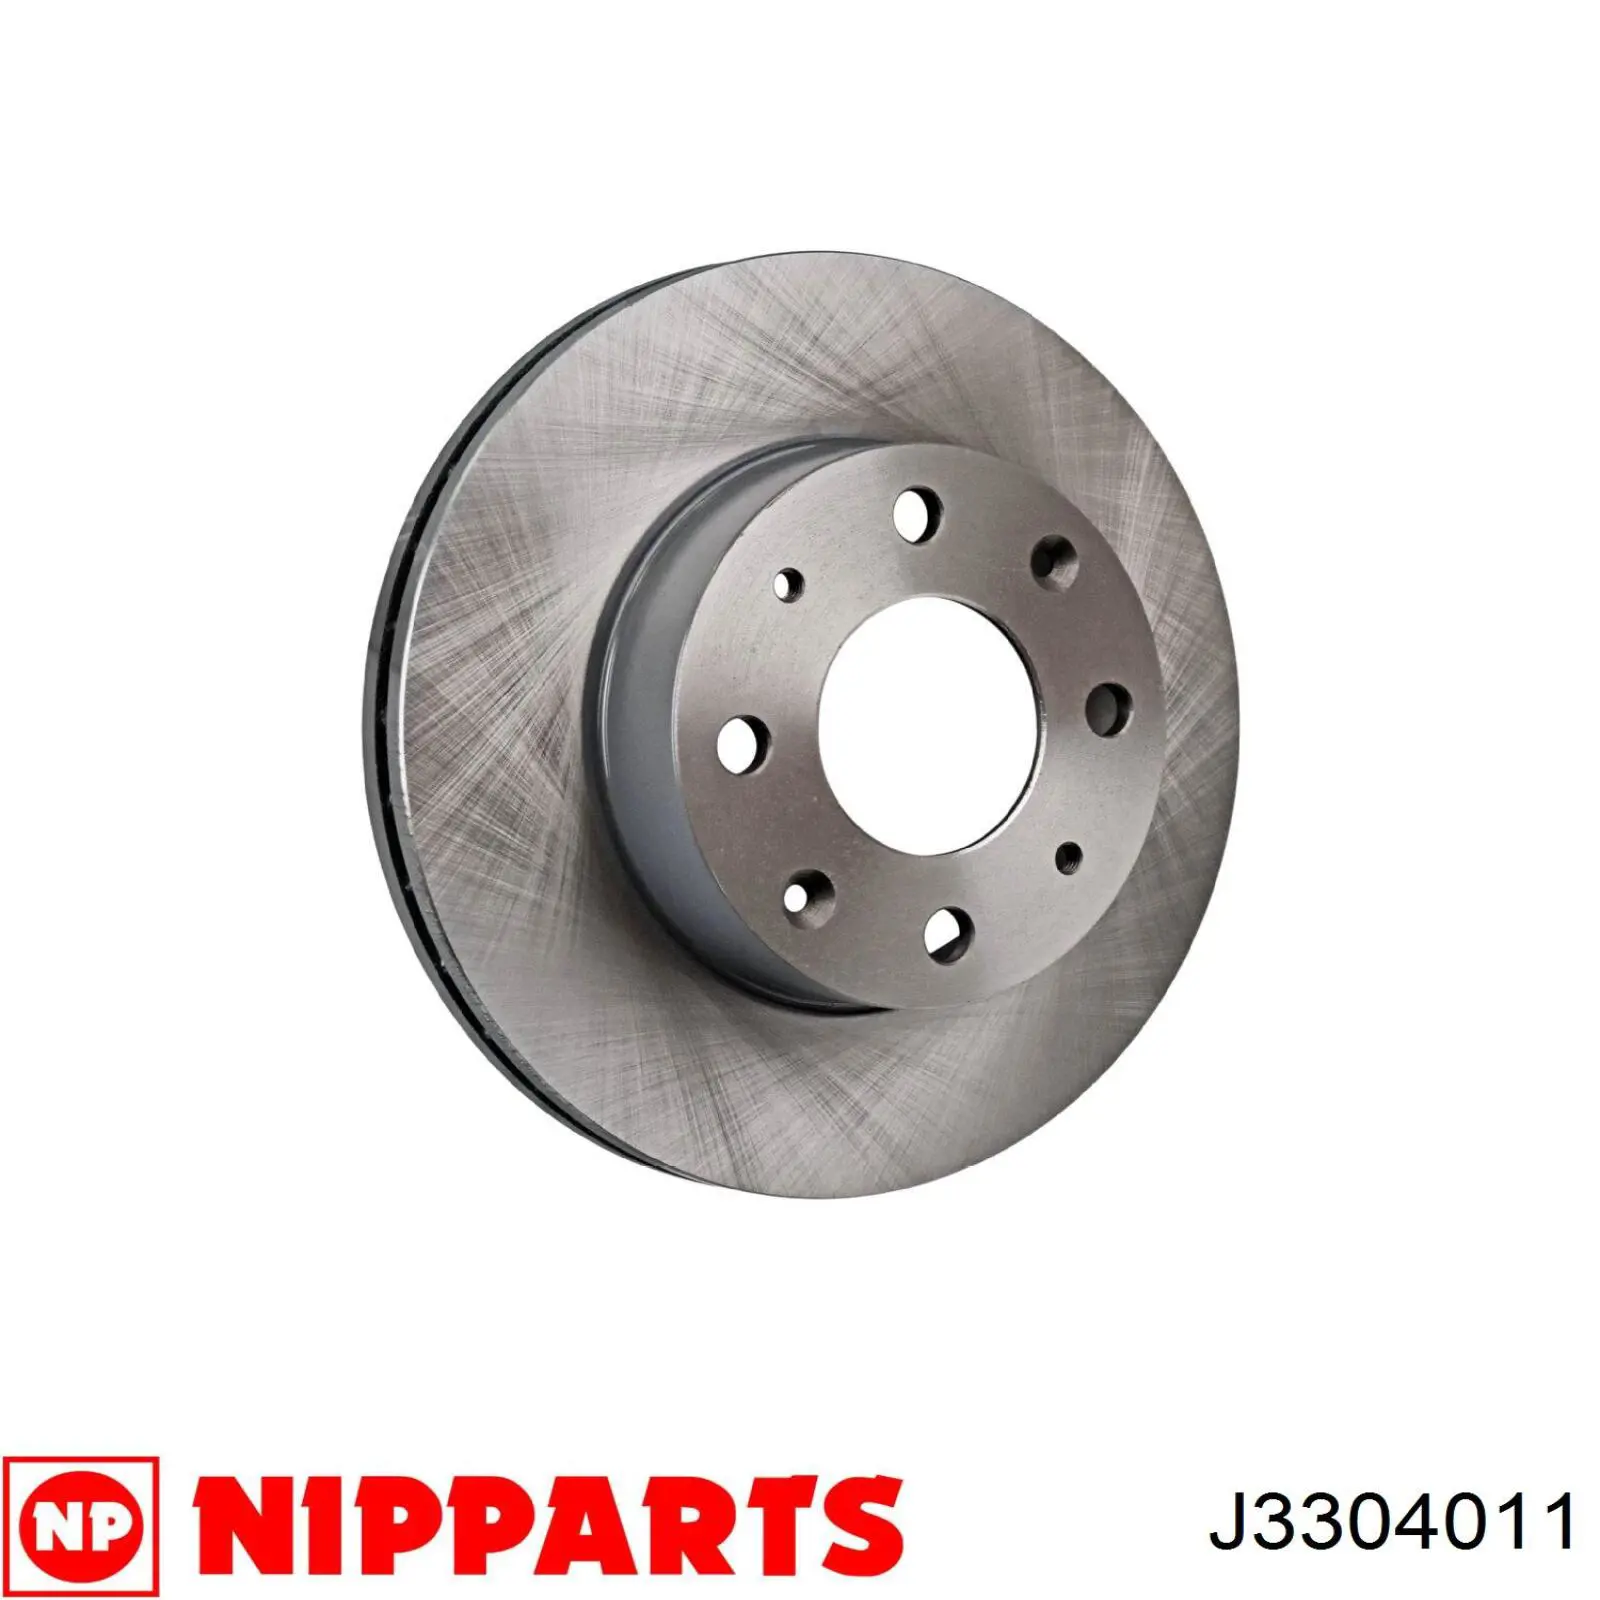 J3304011 Nipparts disco de freno delantero